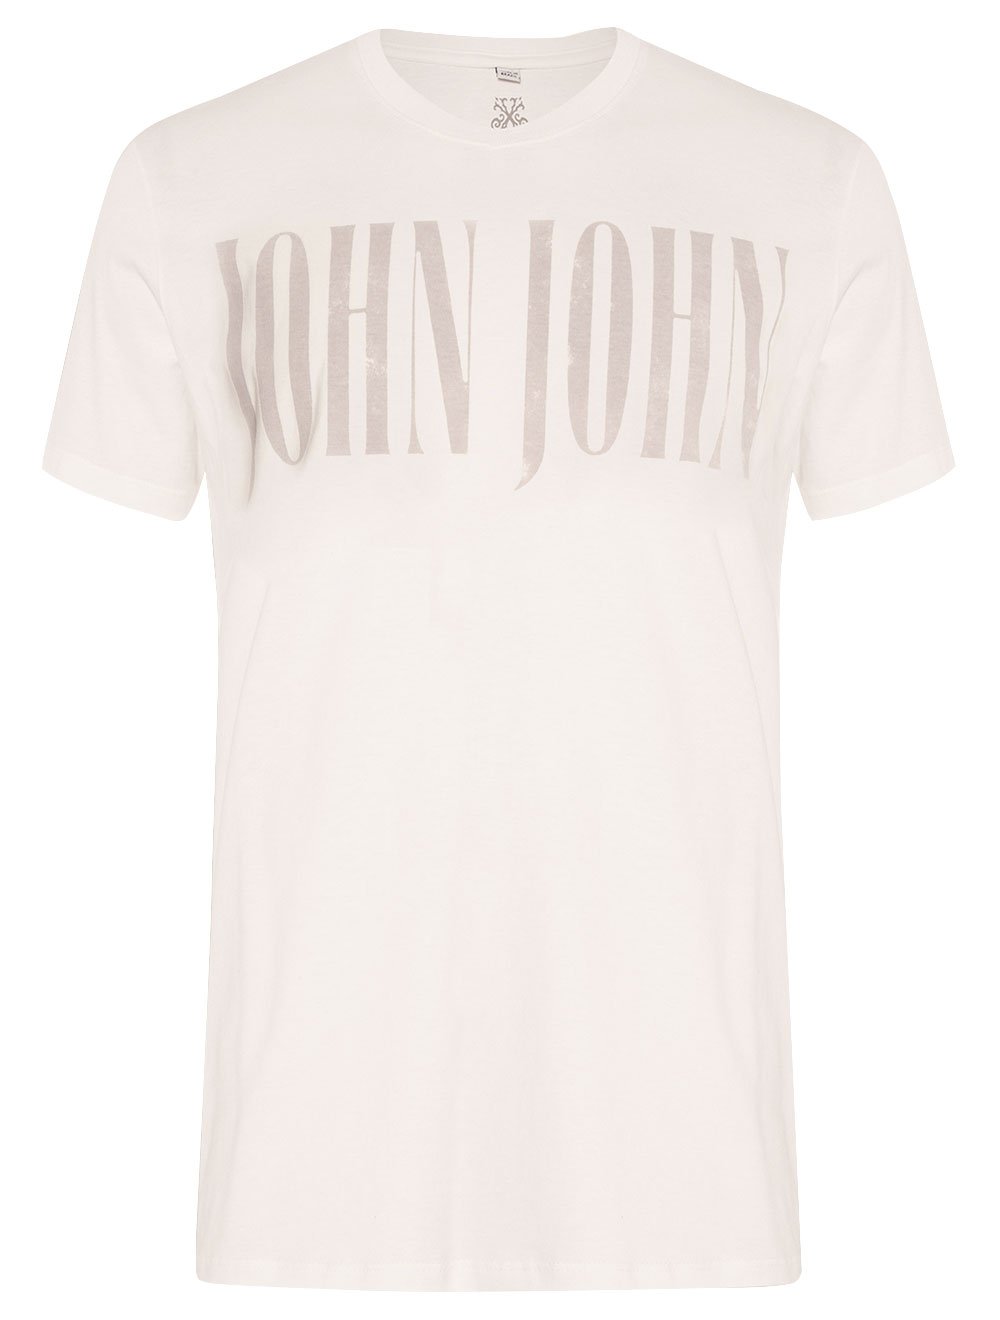 Camiseta John John Masculina Regular Outdoor Logo Branca